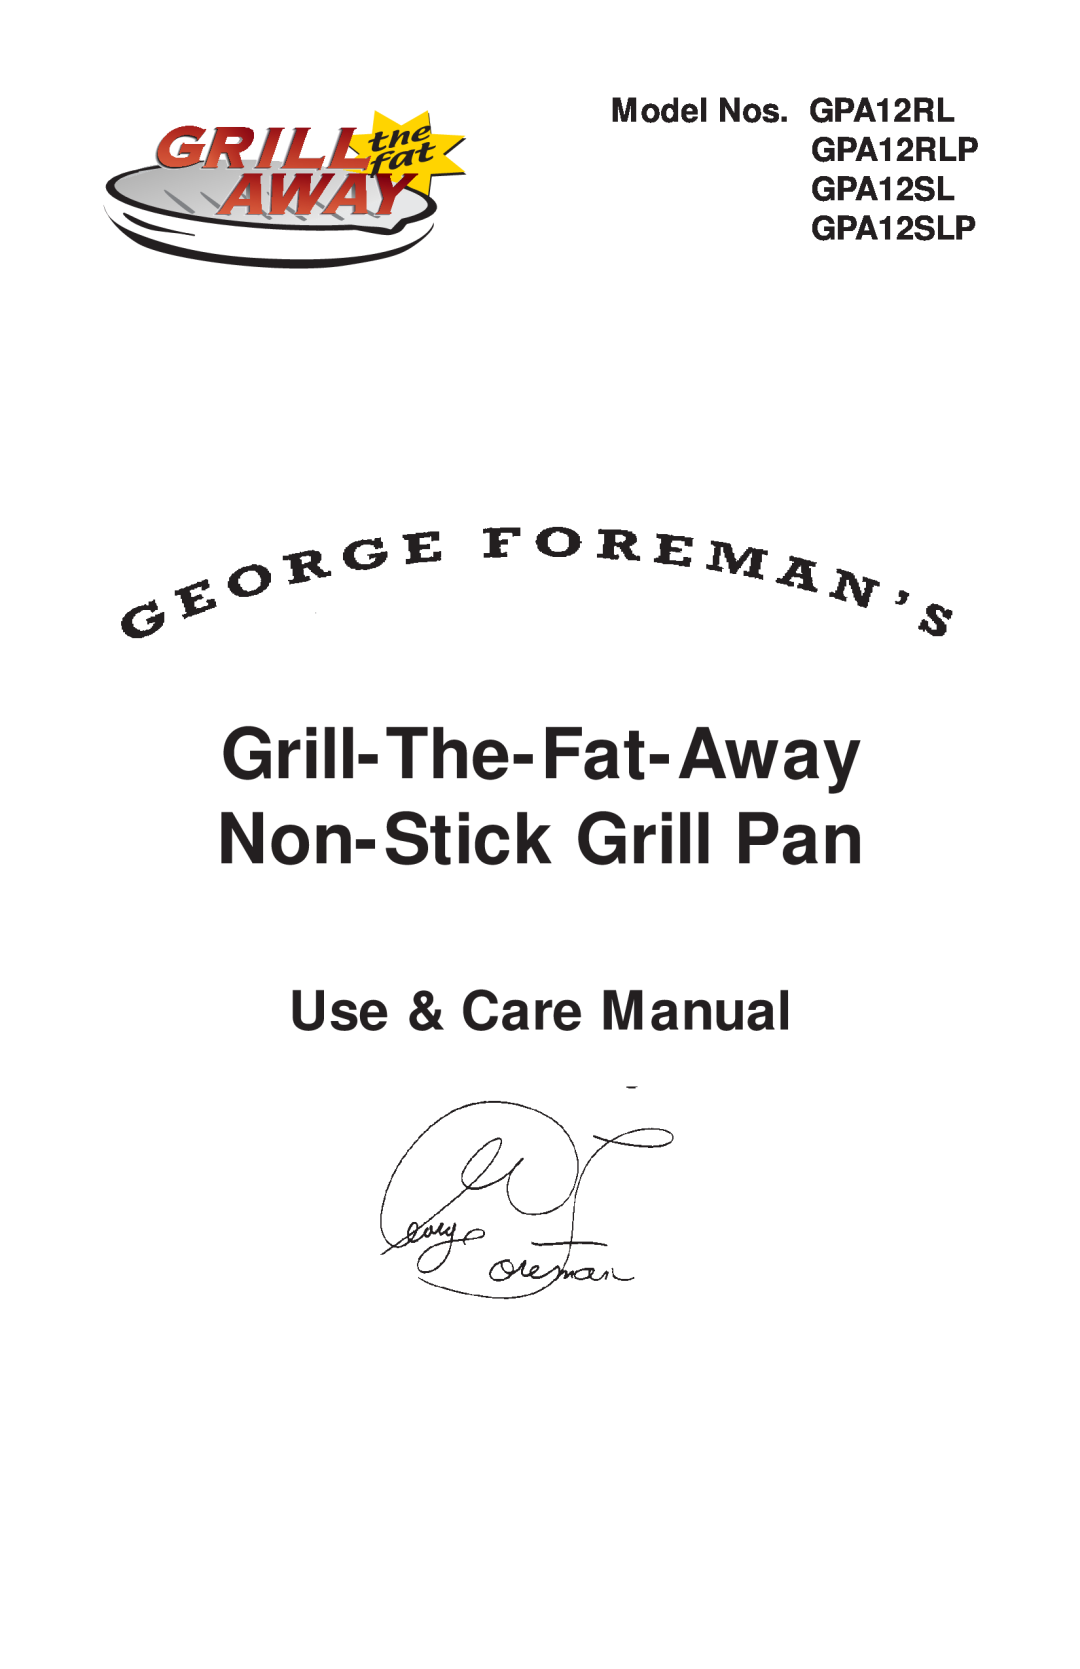 George Foreman GPA12SLP, GPA12RLP manual Grill-The-Fat-Away Non-StickGrill Pan, Use & Care Manual 